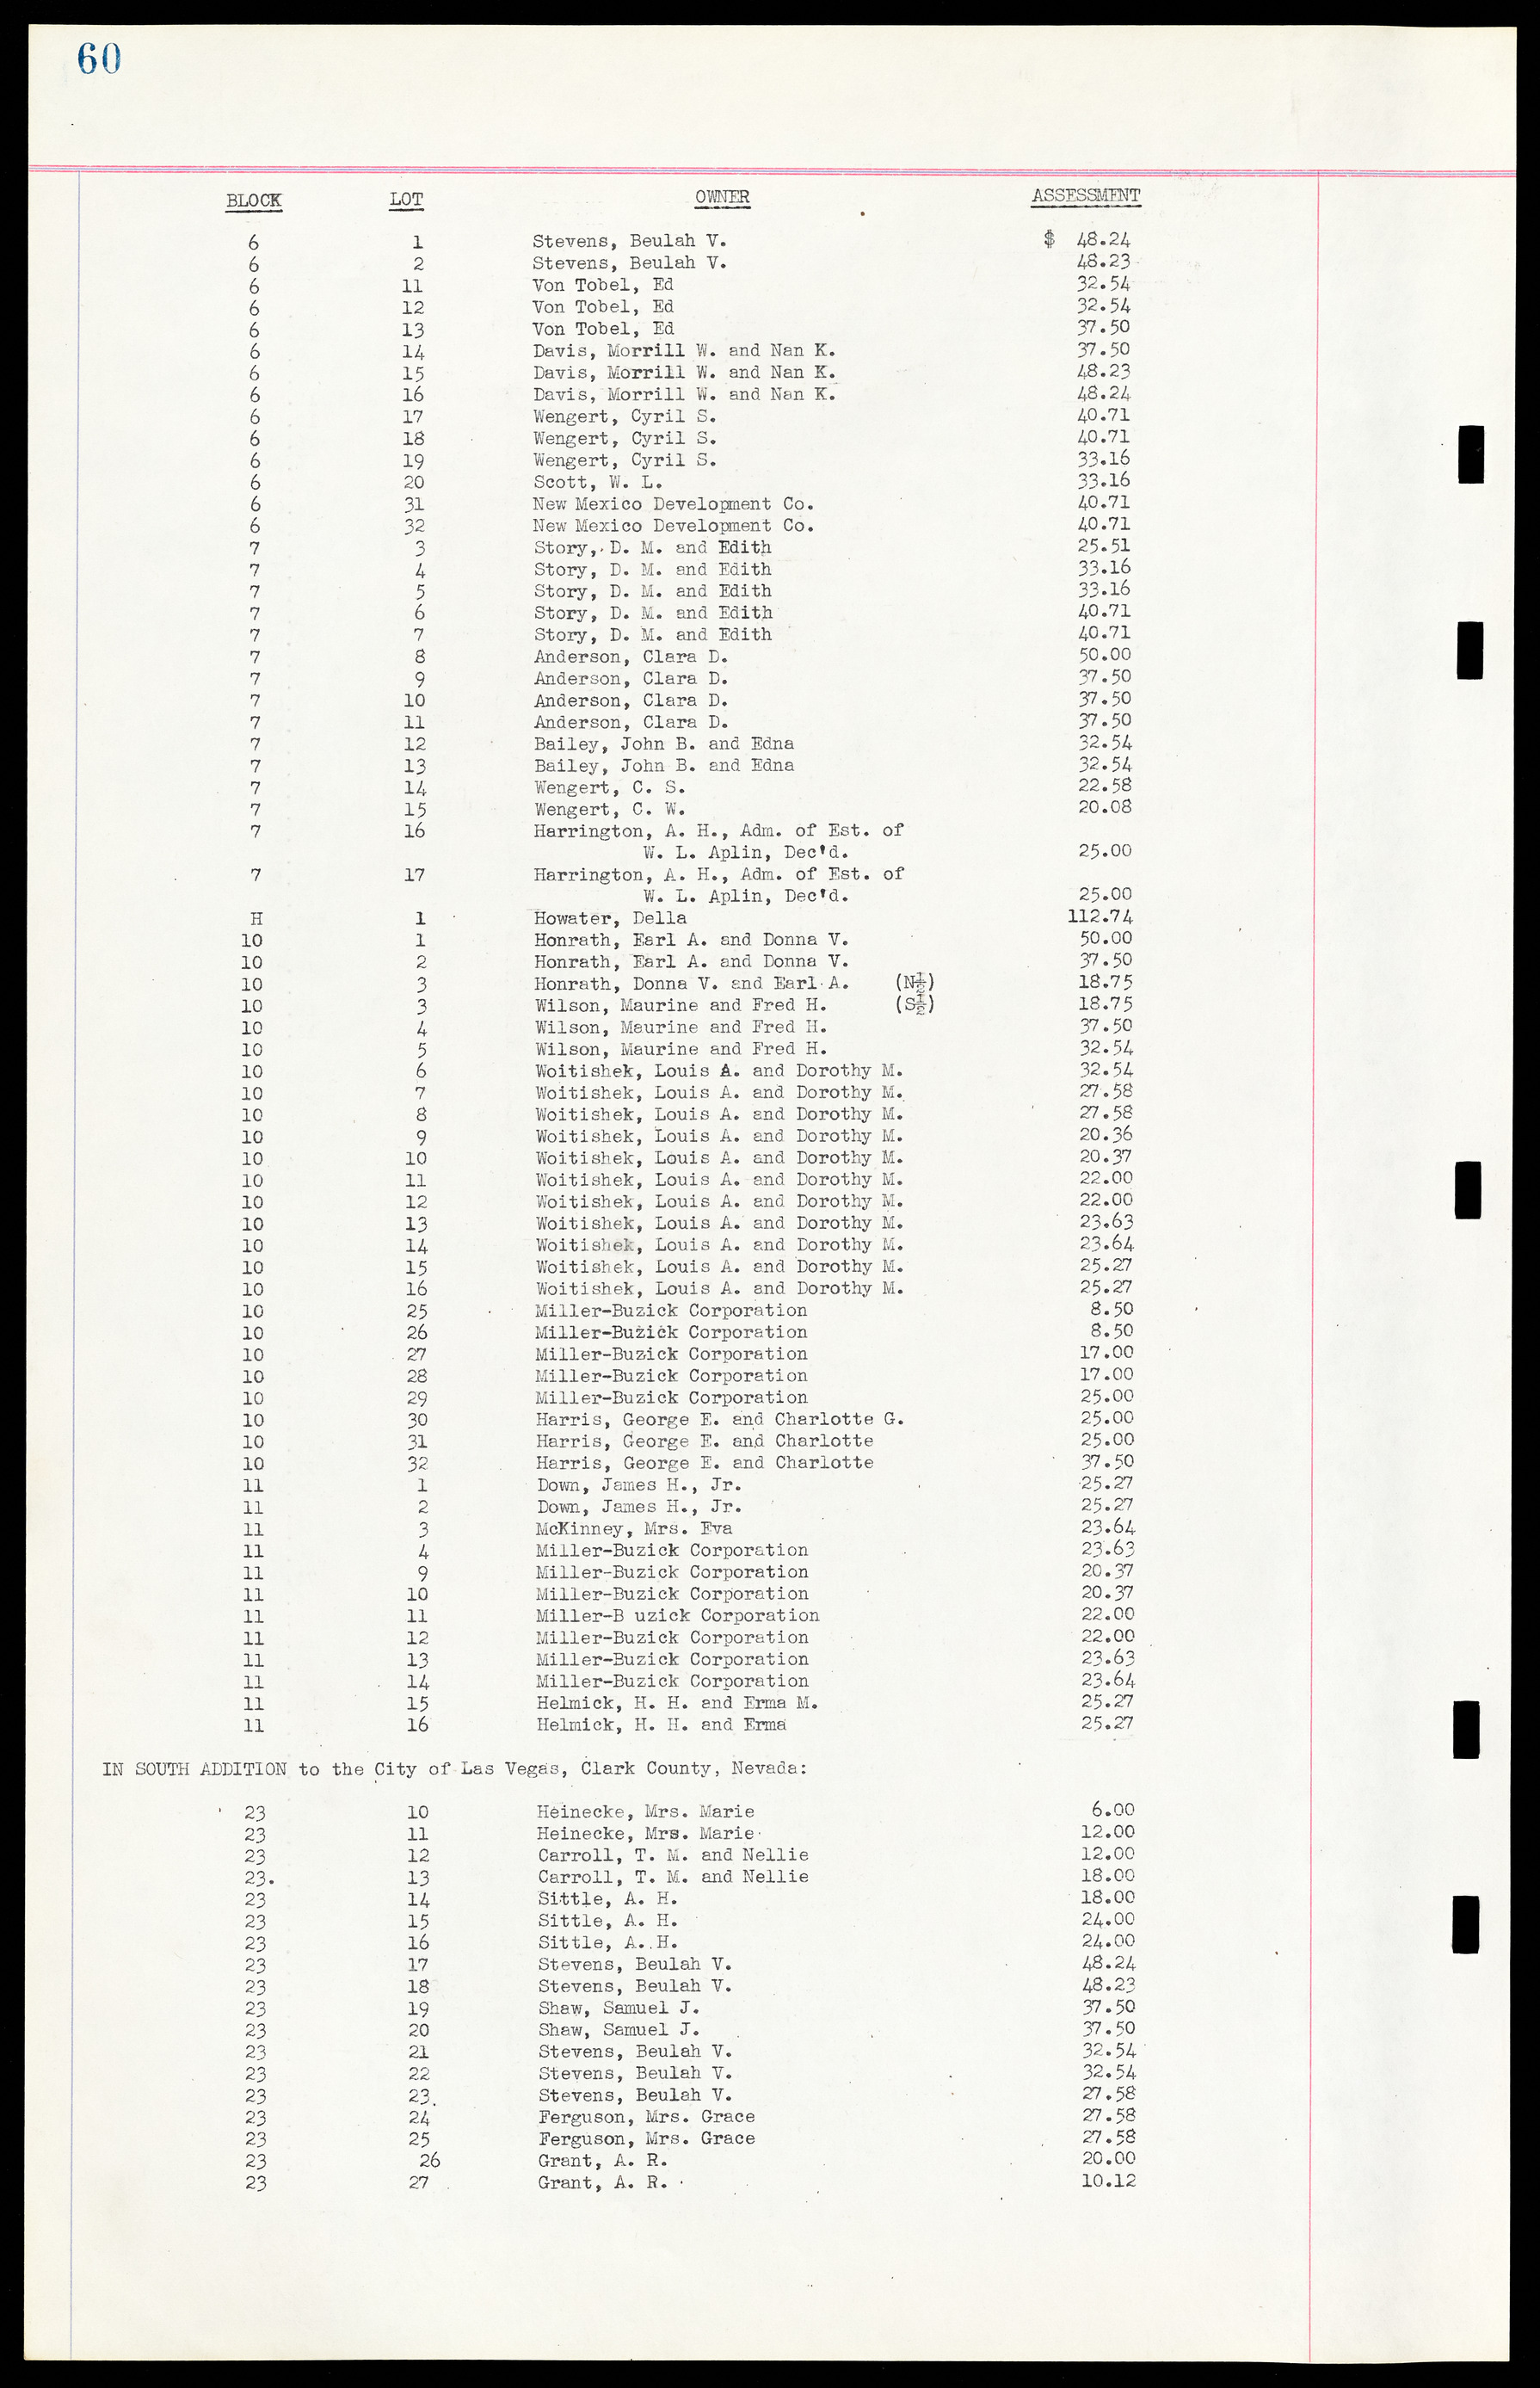 Las Vegas City Ordinances, March 31, 1933 to October 25, 1950, lvc000014-78